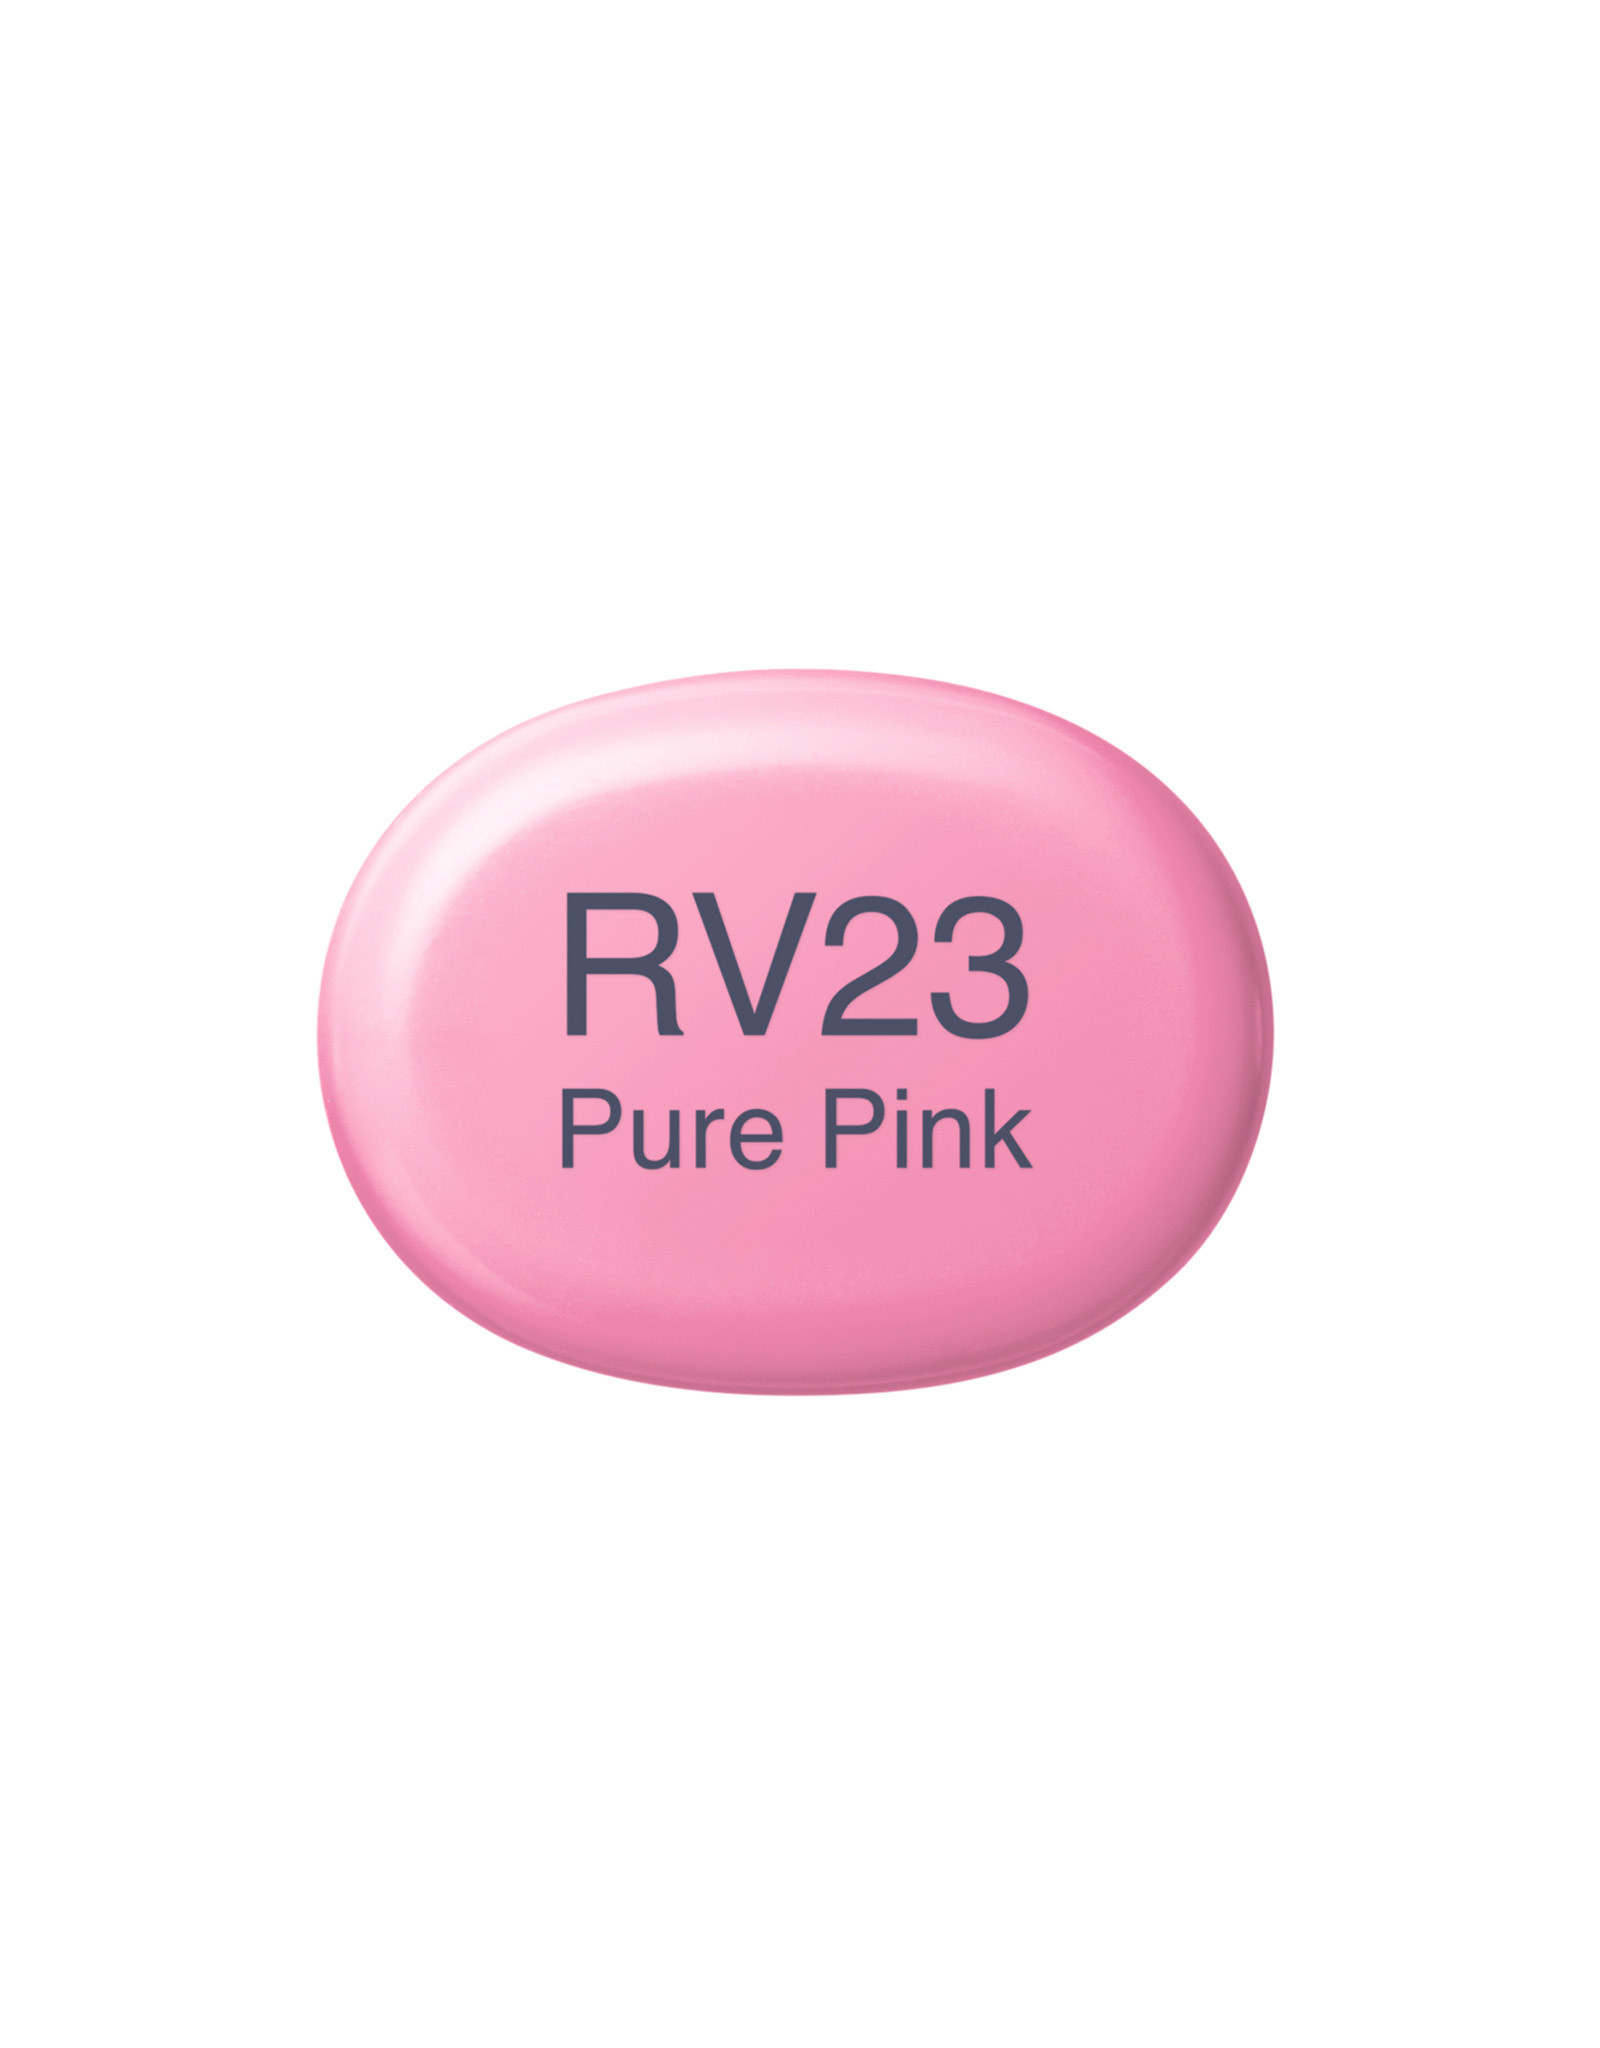 COPIC COPIC Sketch Marker RV23 Pure Pink